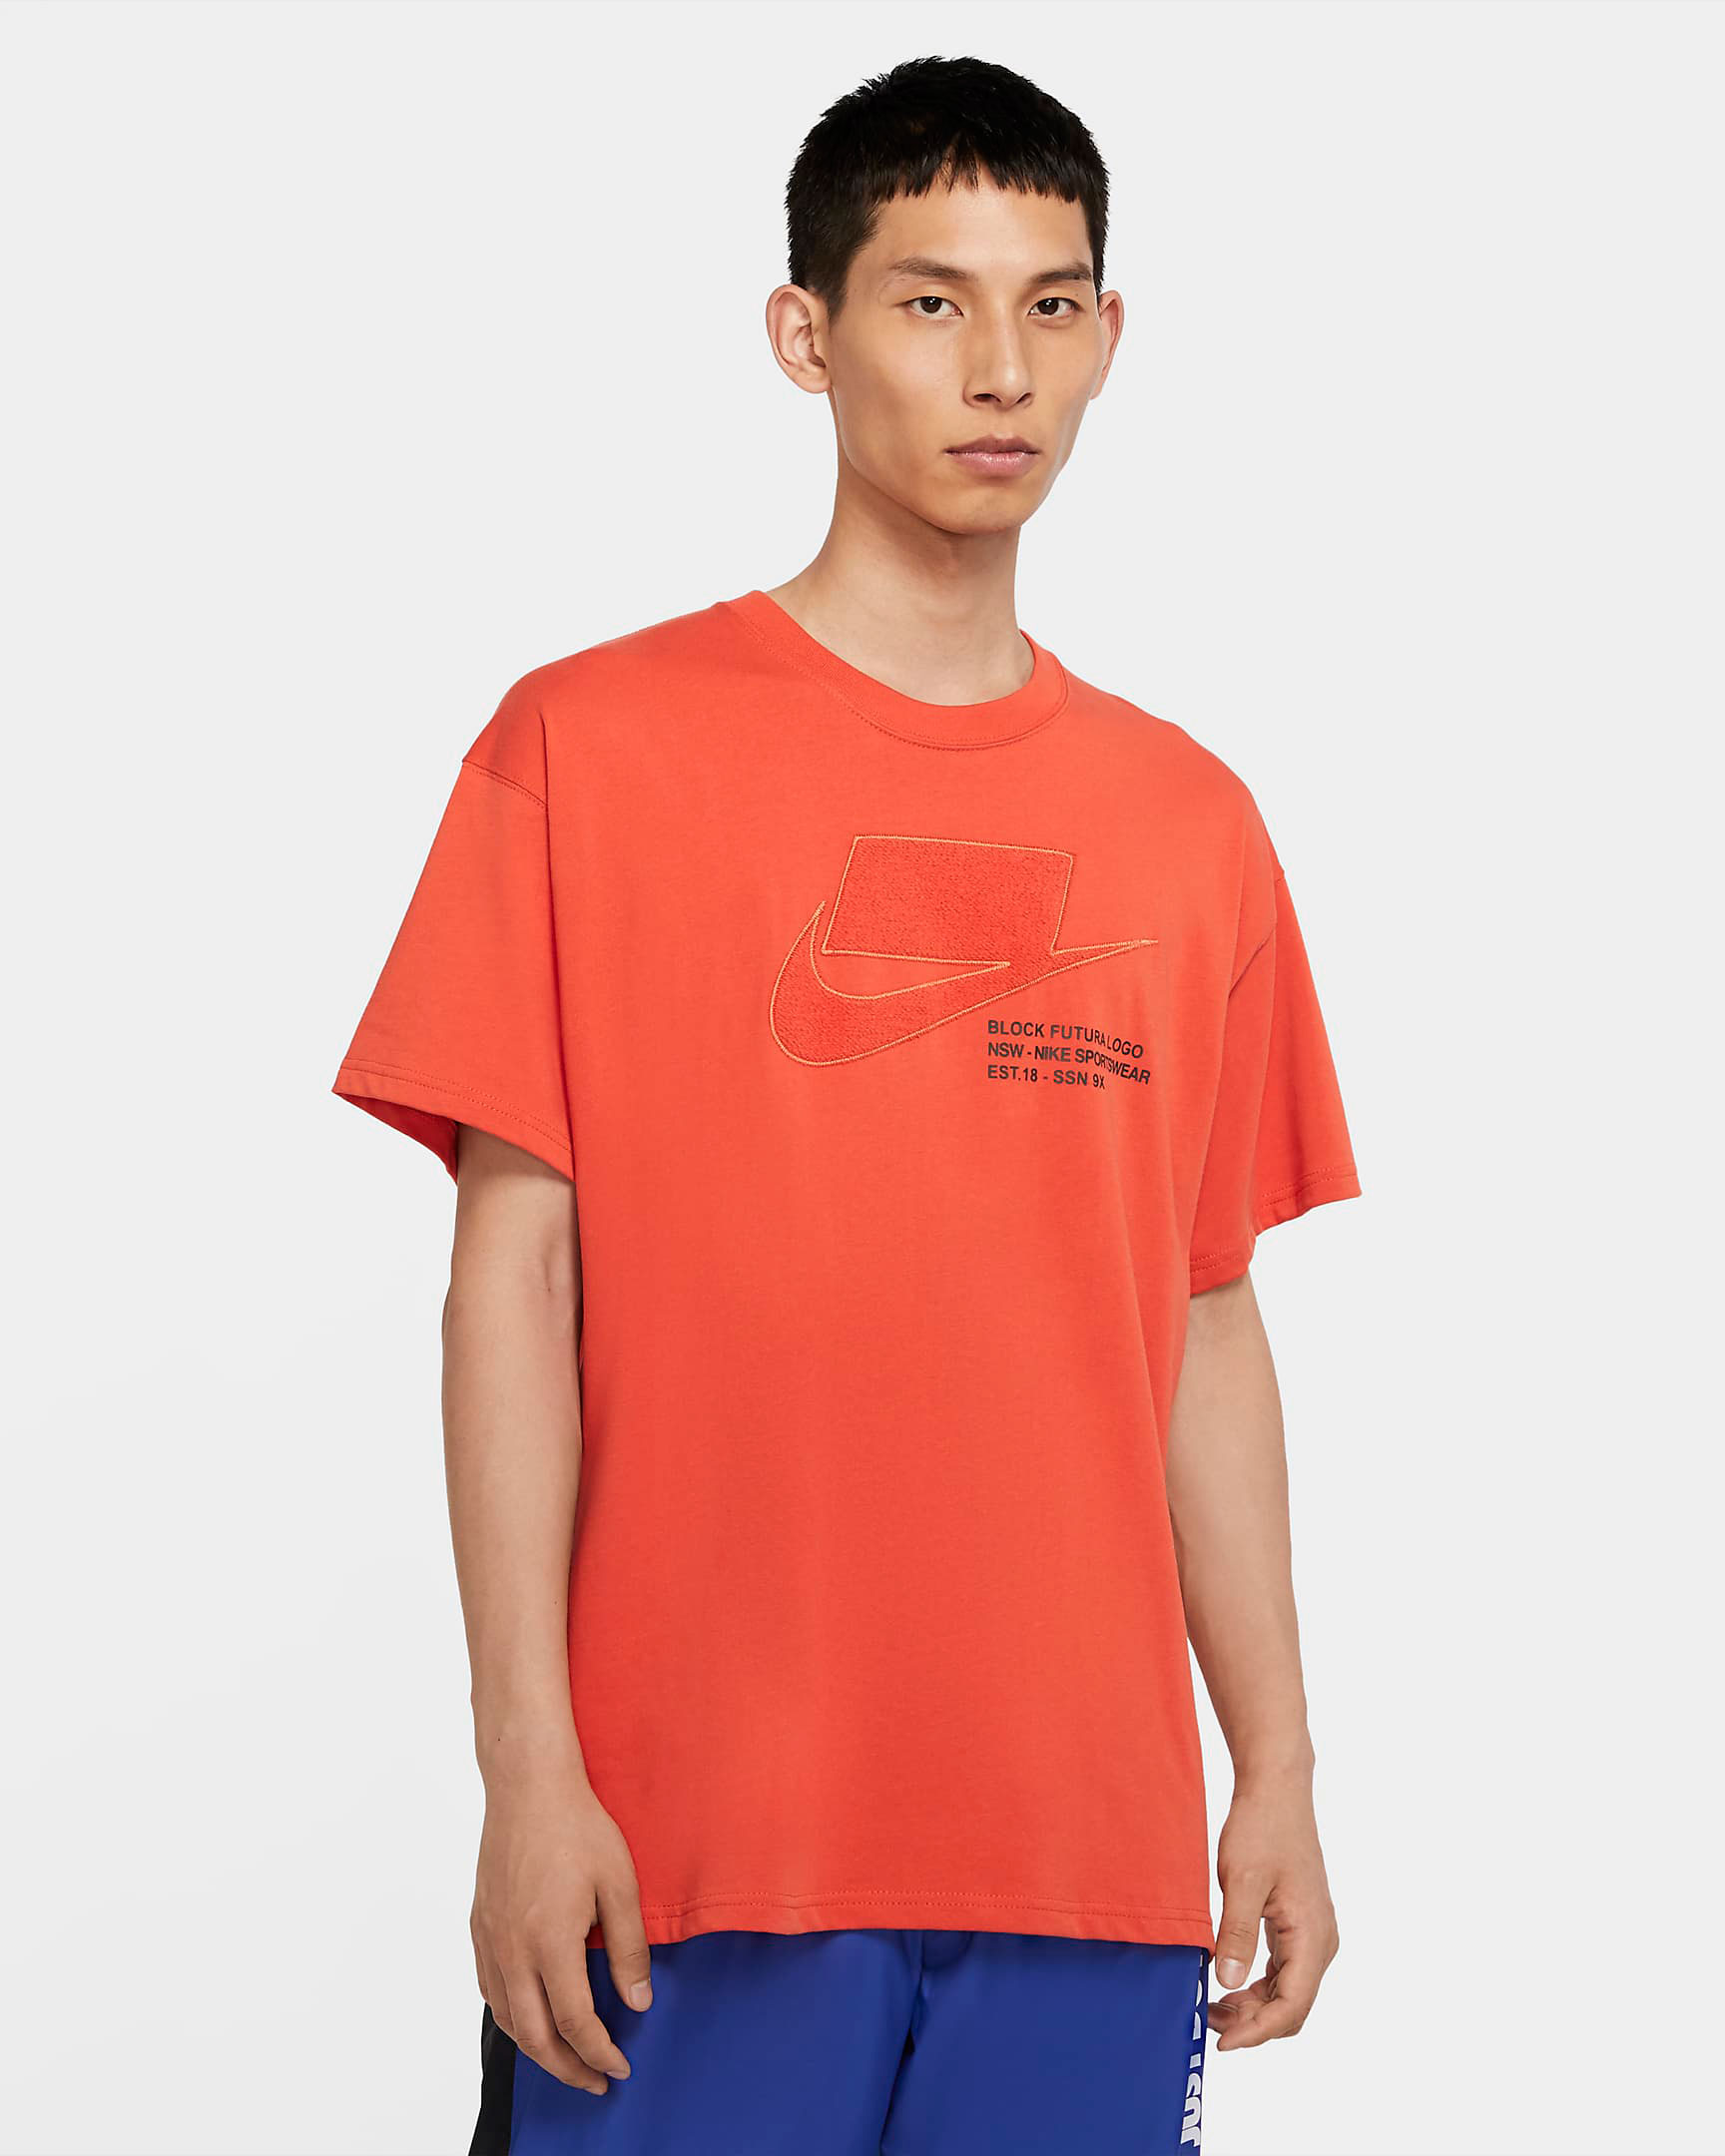 nike-futura-block-orange-shirt